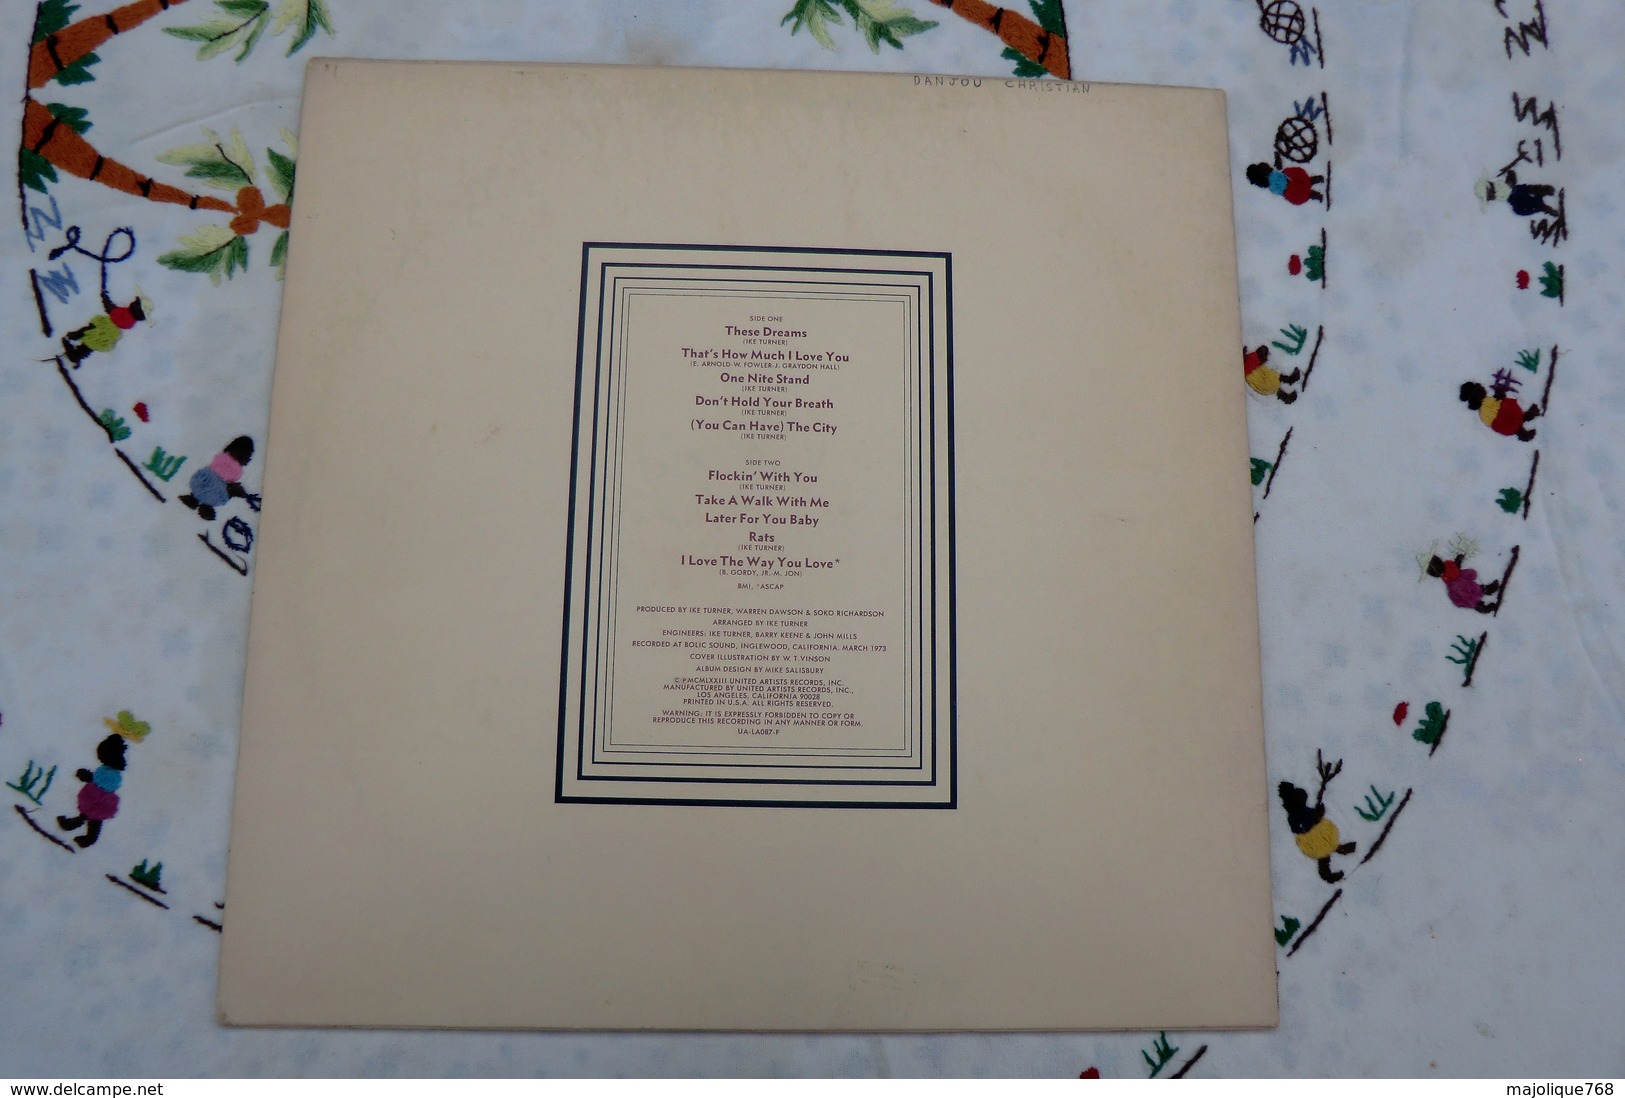 Disque De Ike Turner - Bad Dreams - United Artists Records - UA-LA087-F - 1973 -USA - Soul - R&B